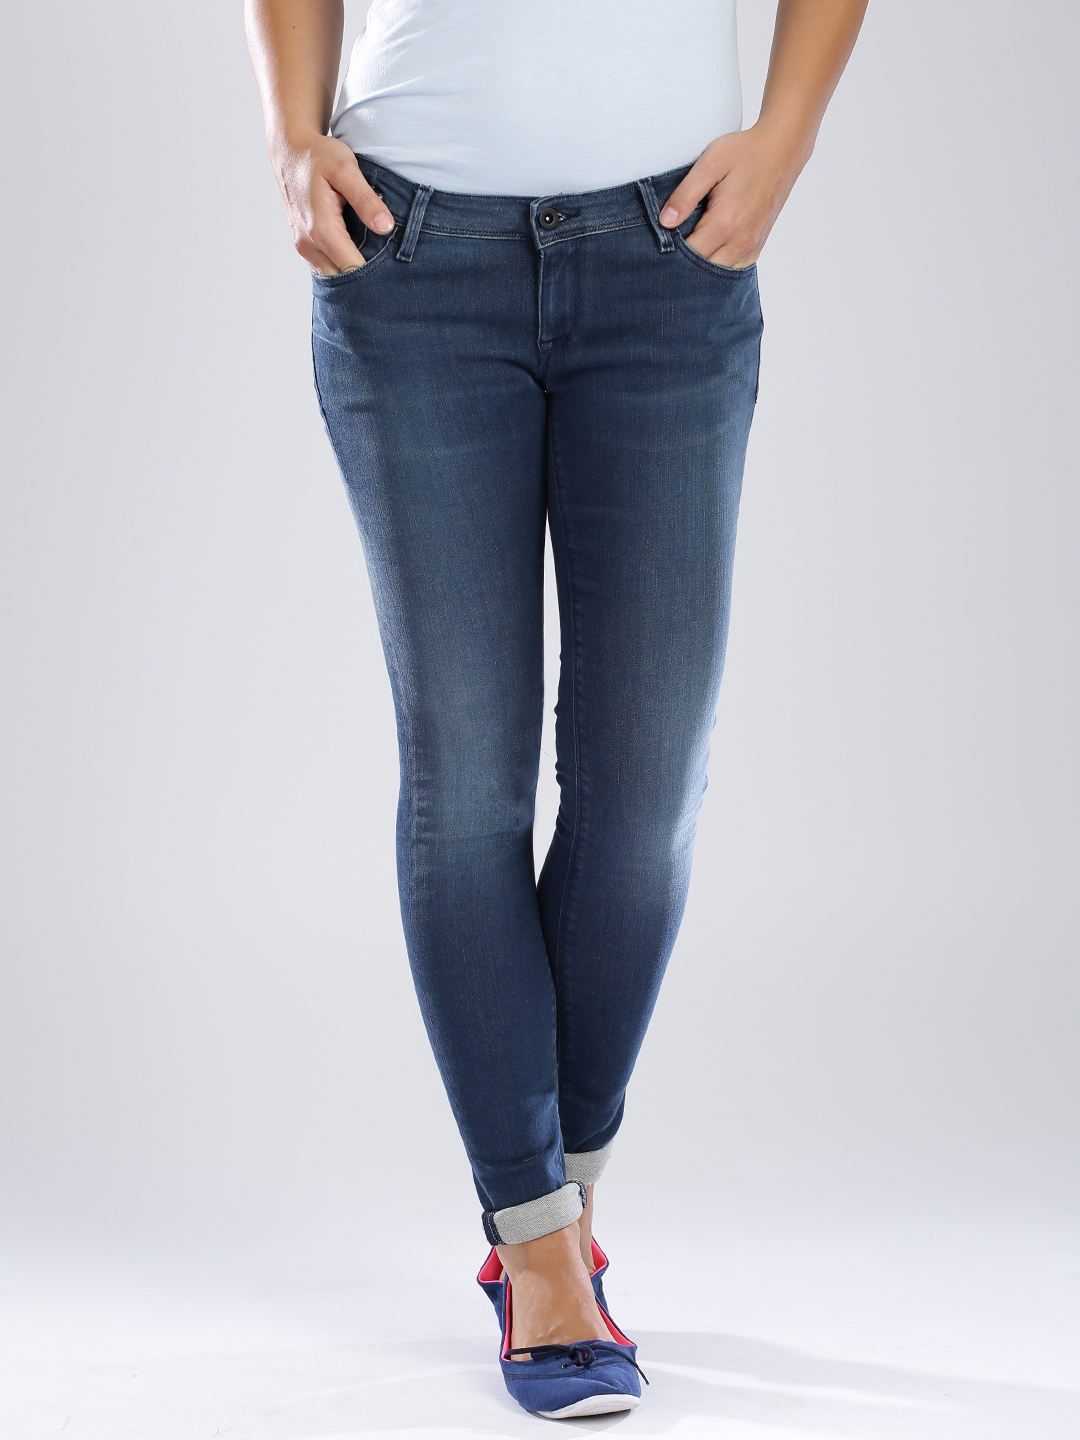 Tommy Hilfiger Navy Natalie Skinny Jeans - Jeans for Women 1207676 Myntra